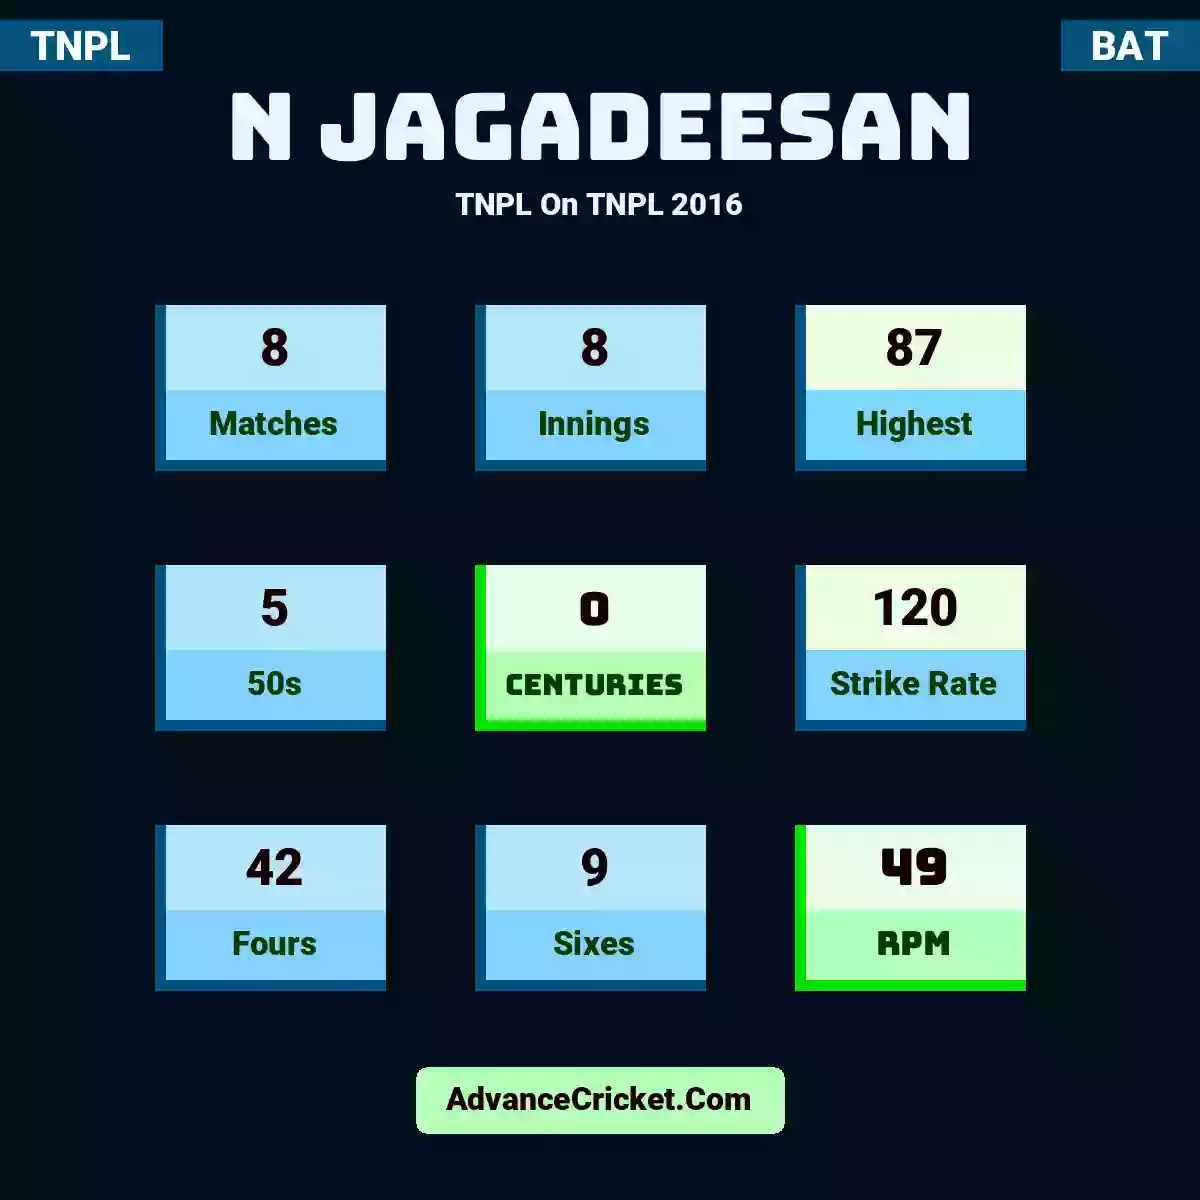 N Jagadeesan TNPL  On TNPL 2016, N Jagadeesan played 8 matches, scored 87 runs as highest, 5 half-centuries, and 0 centuries, with a strike rate of 120. N.Jagadeesan hit 42 fours and 9 sixes, with an RPM of 49.